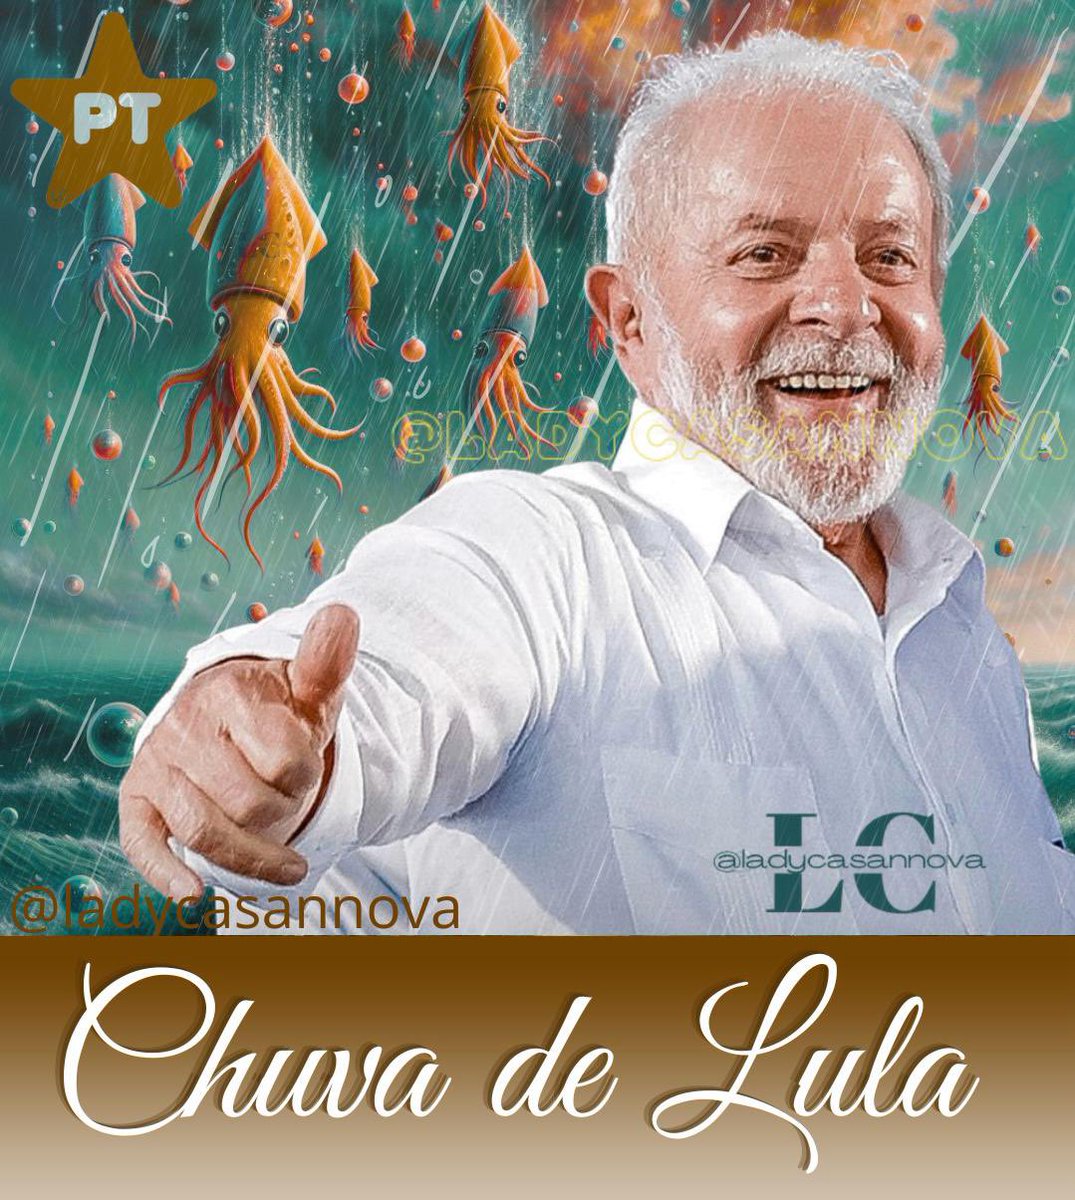 @aroliadm @InesNasciment12 Sim 🙌🏽 
#LulaBrasilDigno 
Chuva de Lula 
@ptbrasil